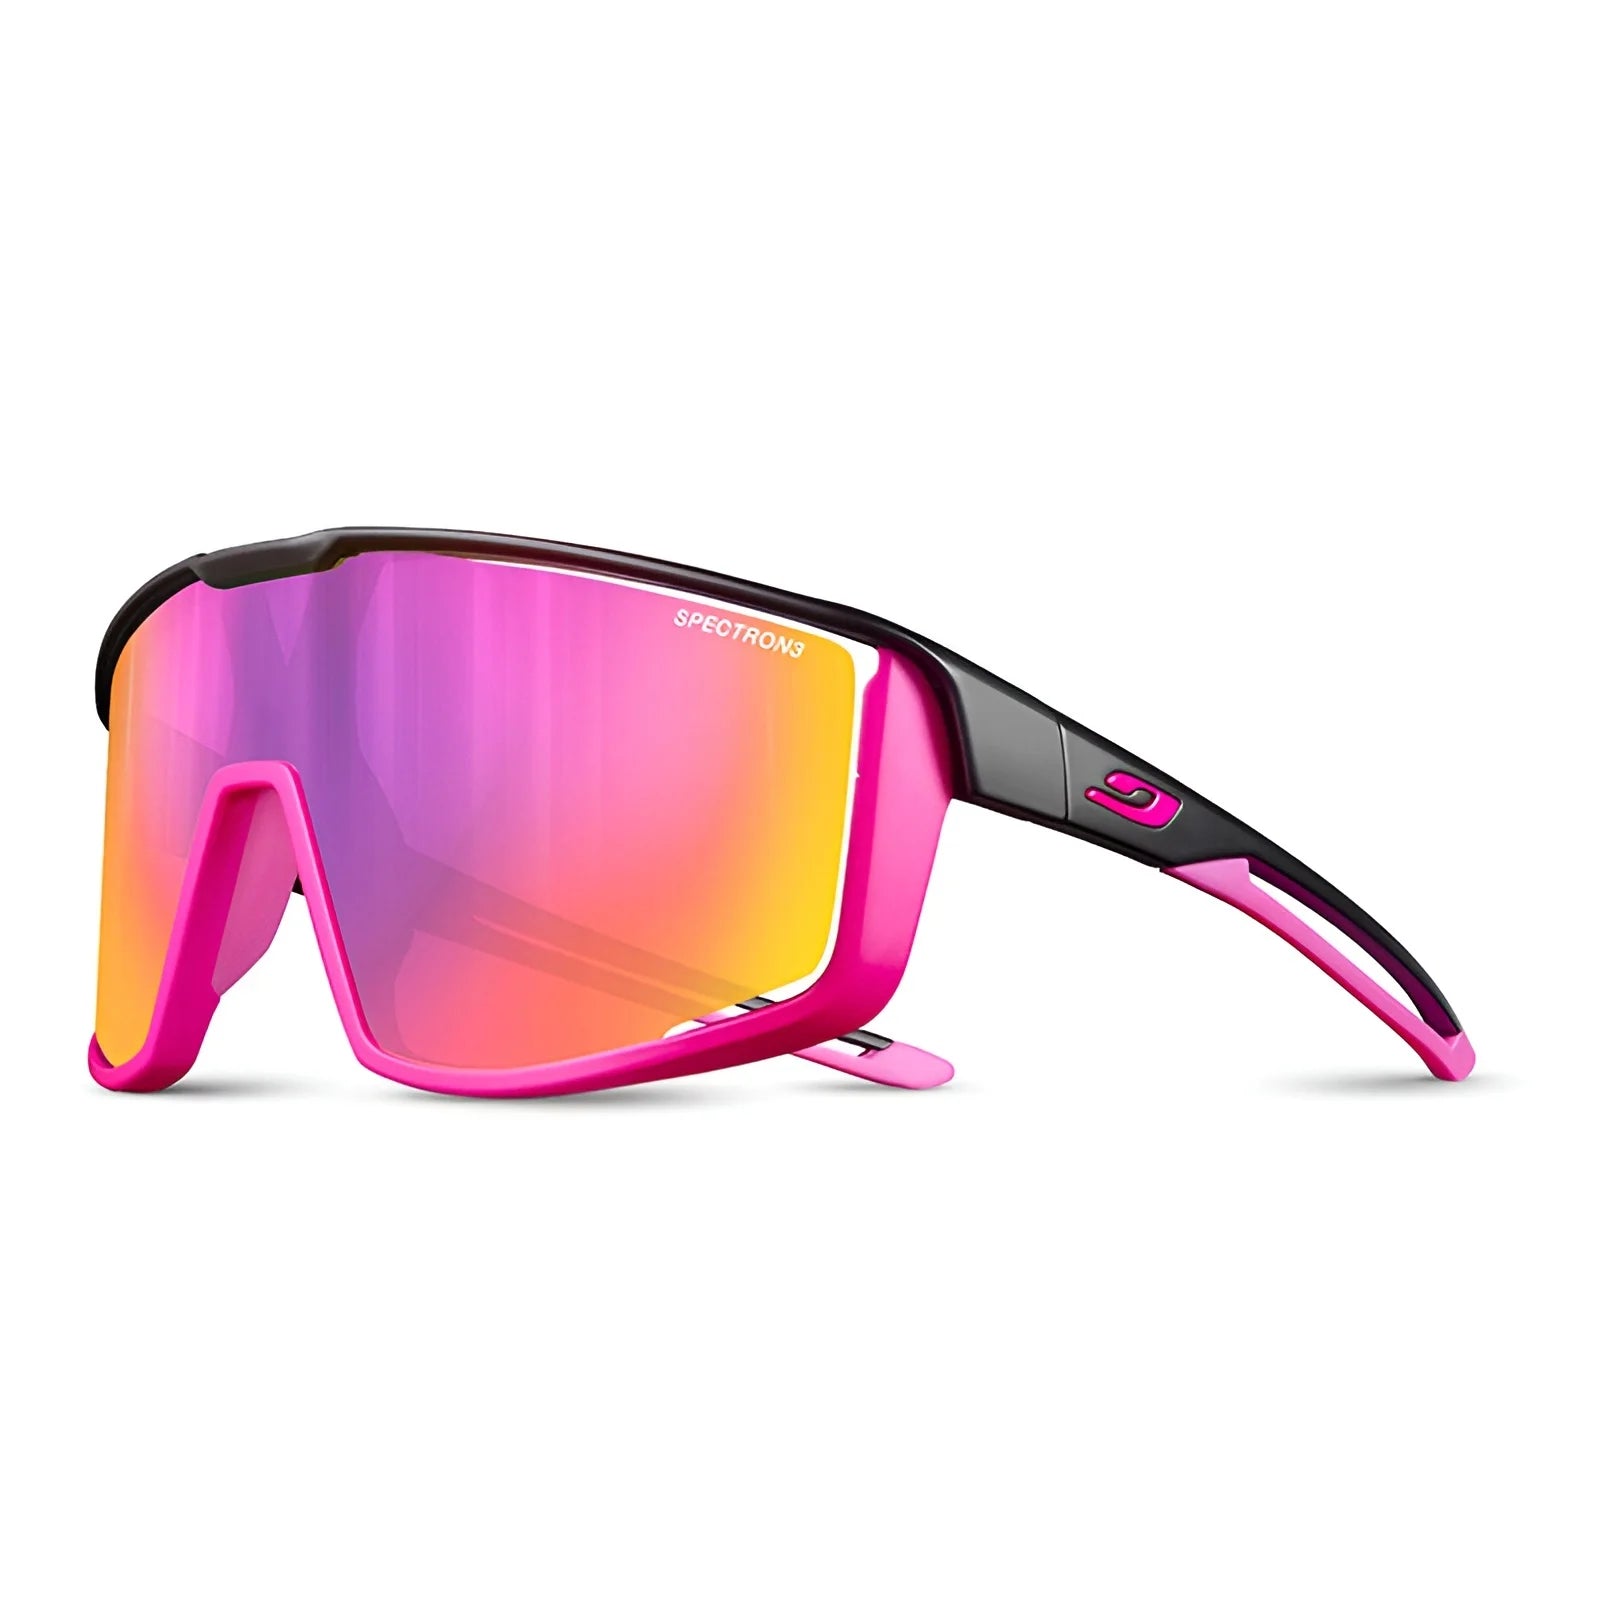 Julbo Fury Sunglasses Black / Pink / Spectron 3 (VLT 13%)